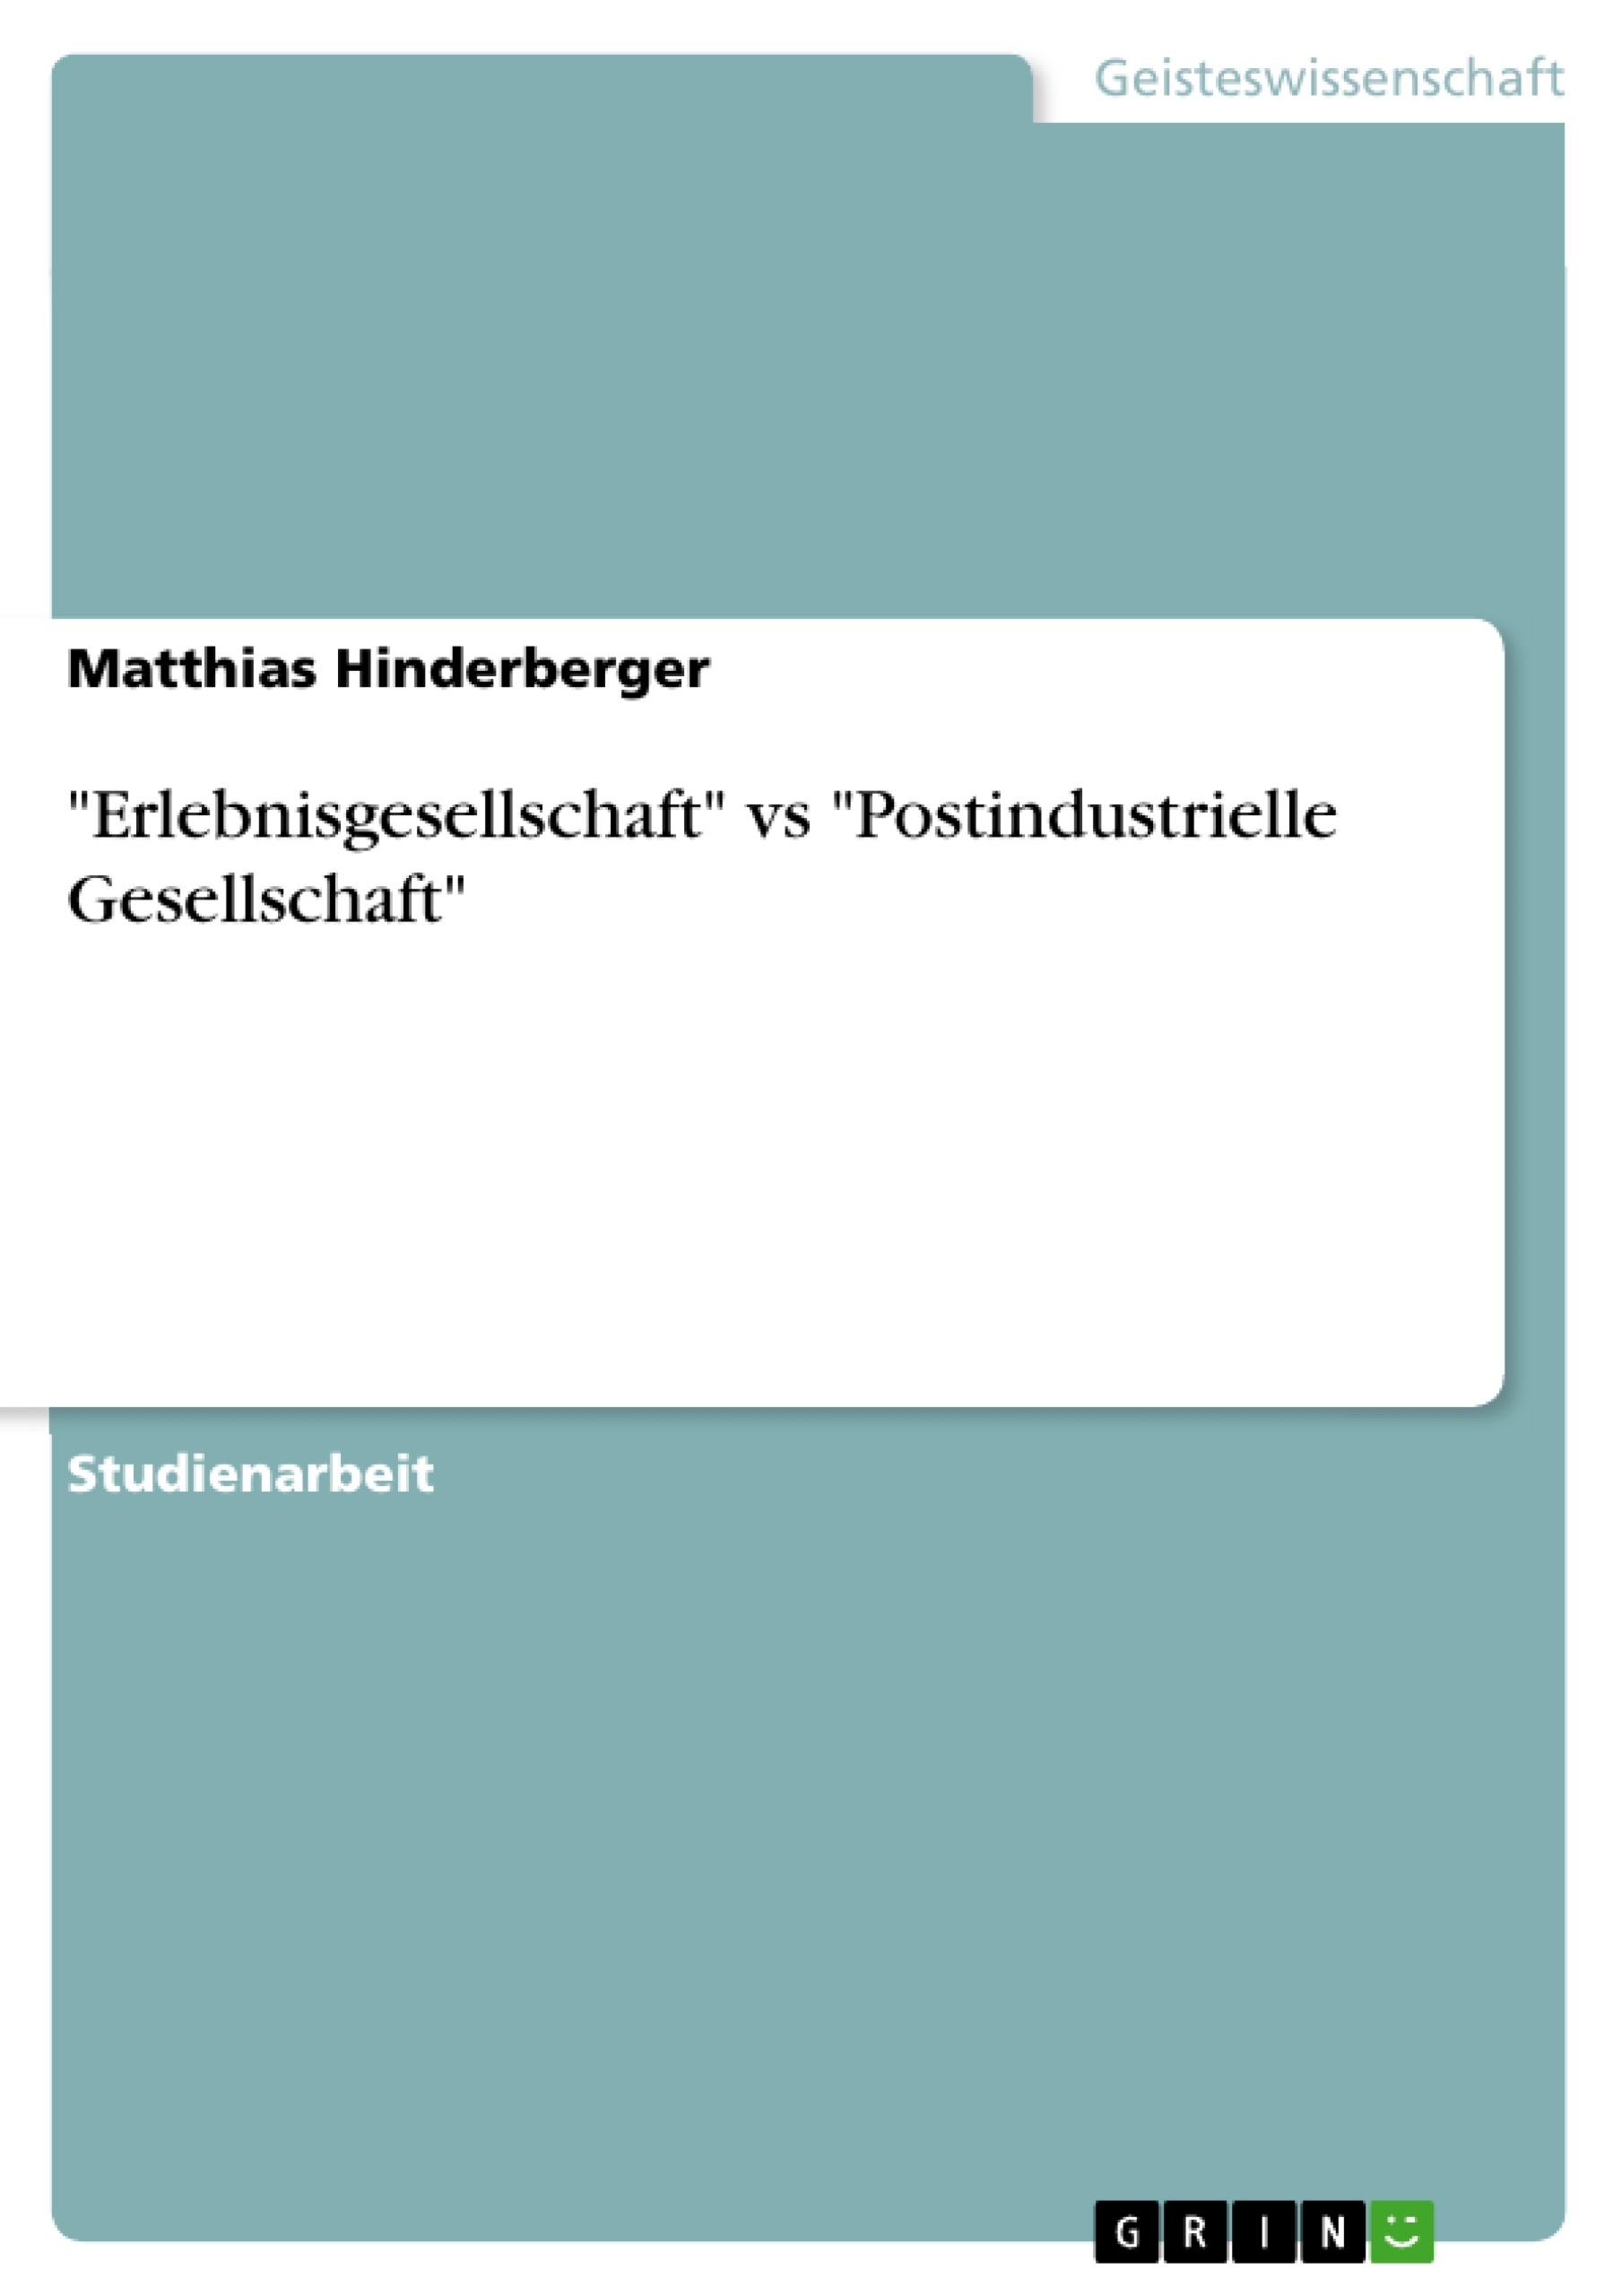 Title: "Erlebnisgesellschaft" vs "Postindustrielle Gesellschaft"